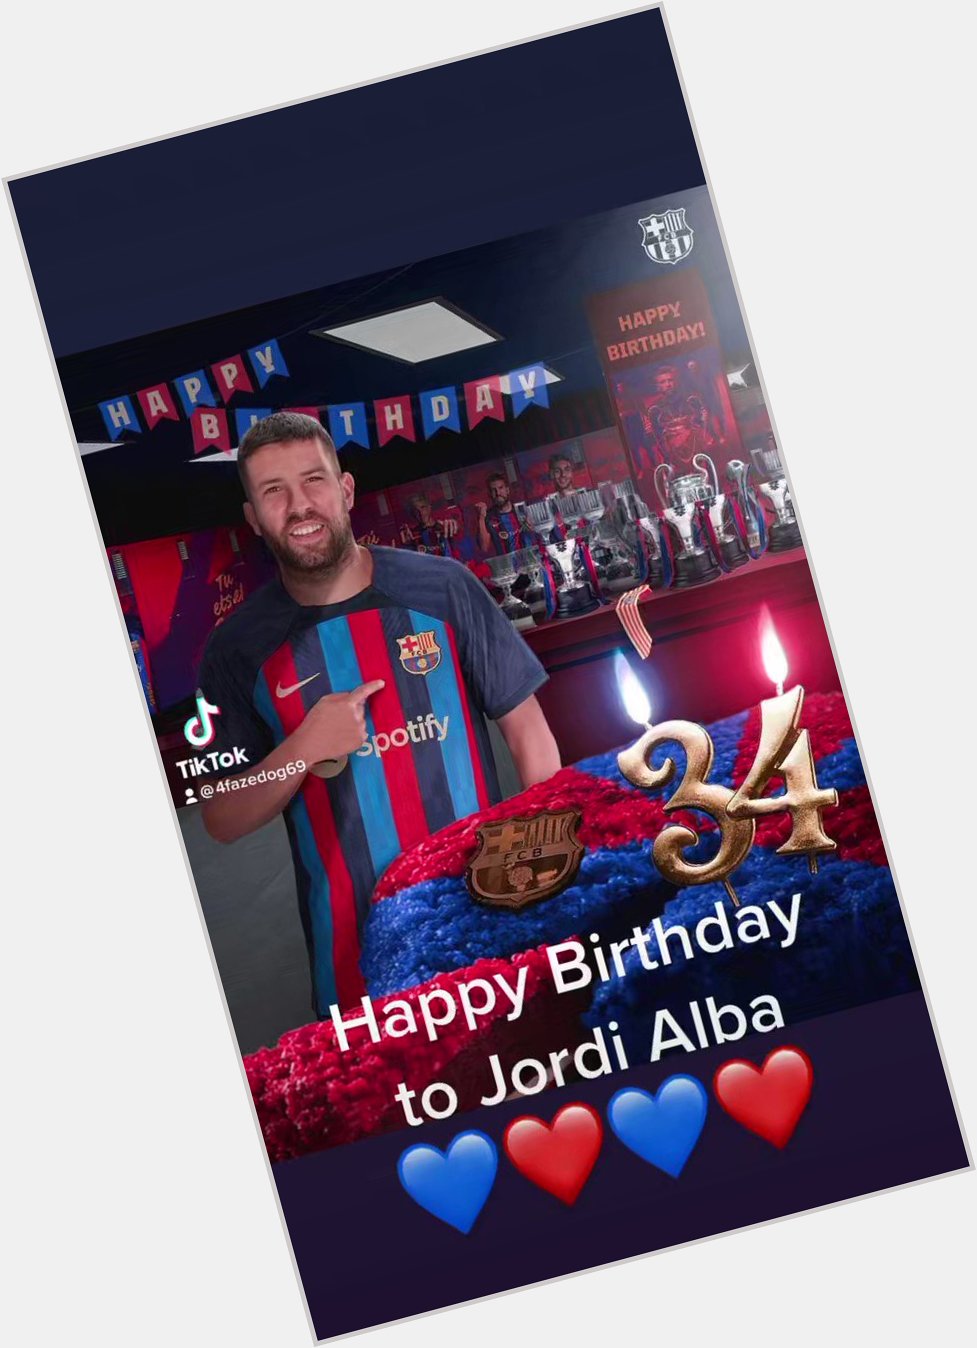 Can everyone say happy birthday to  Jordi Alba      